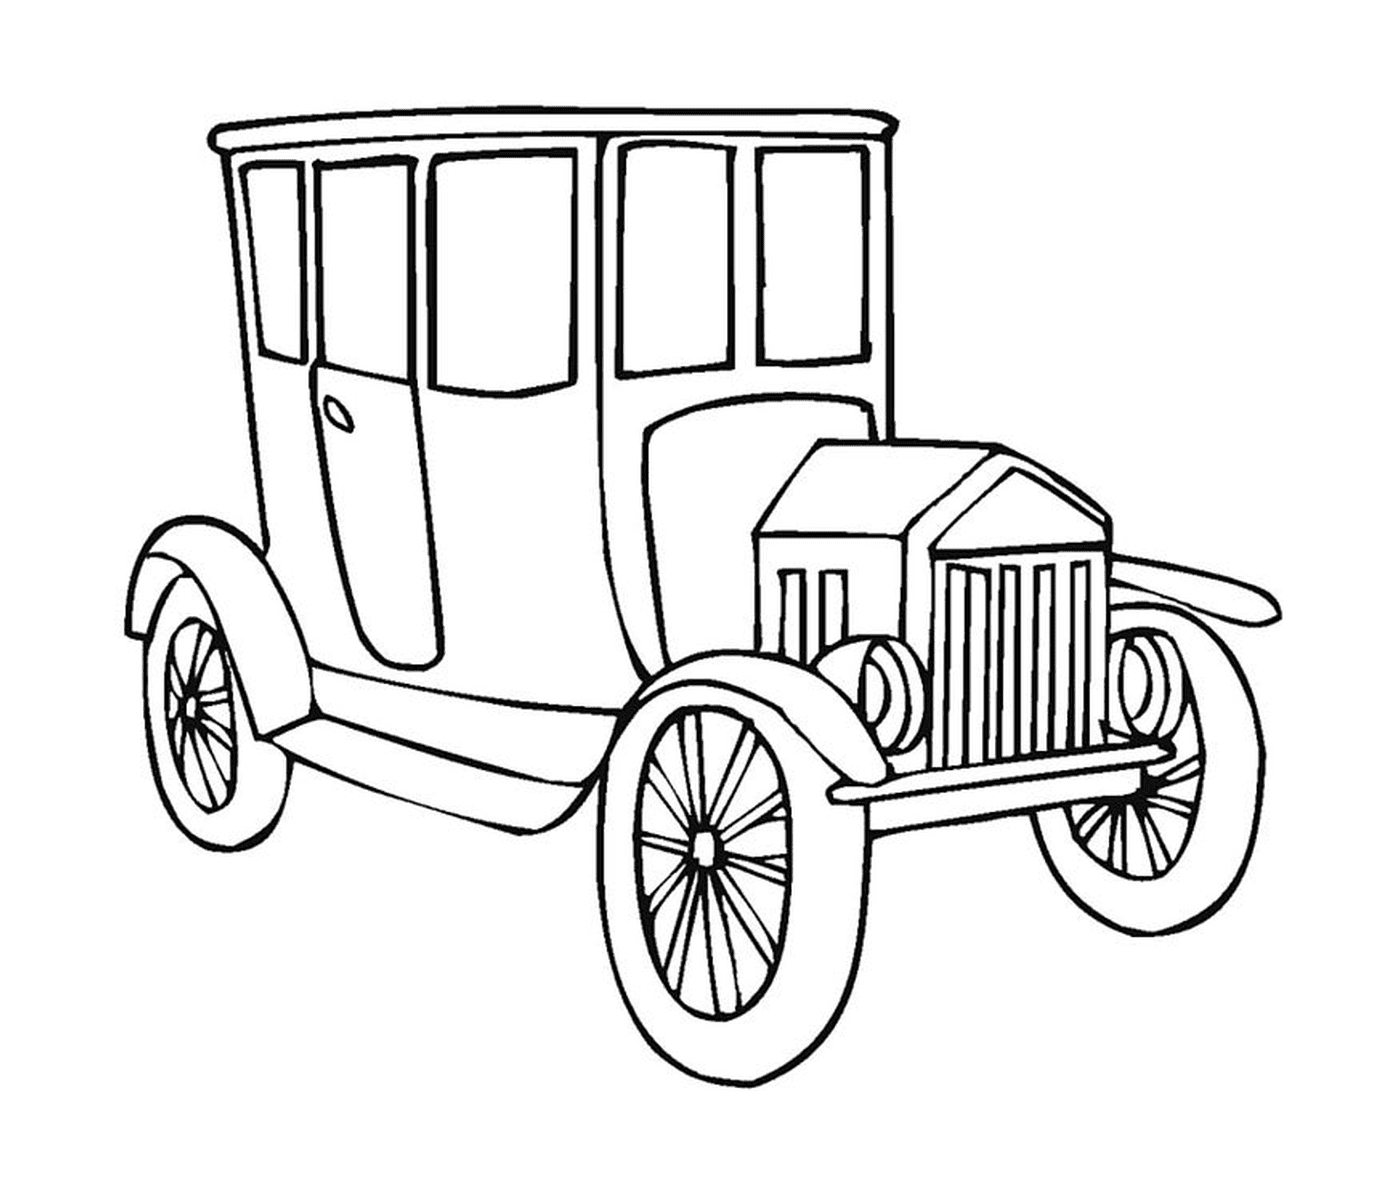  Нарисован старый автомобиль 